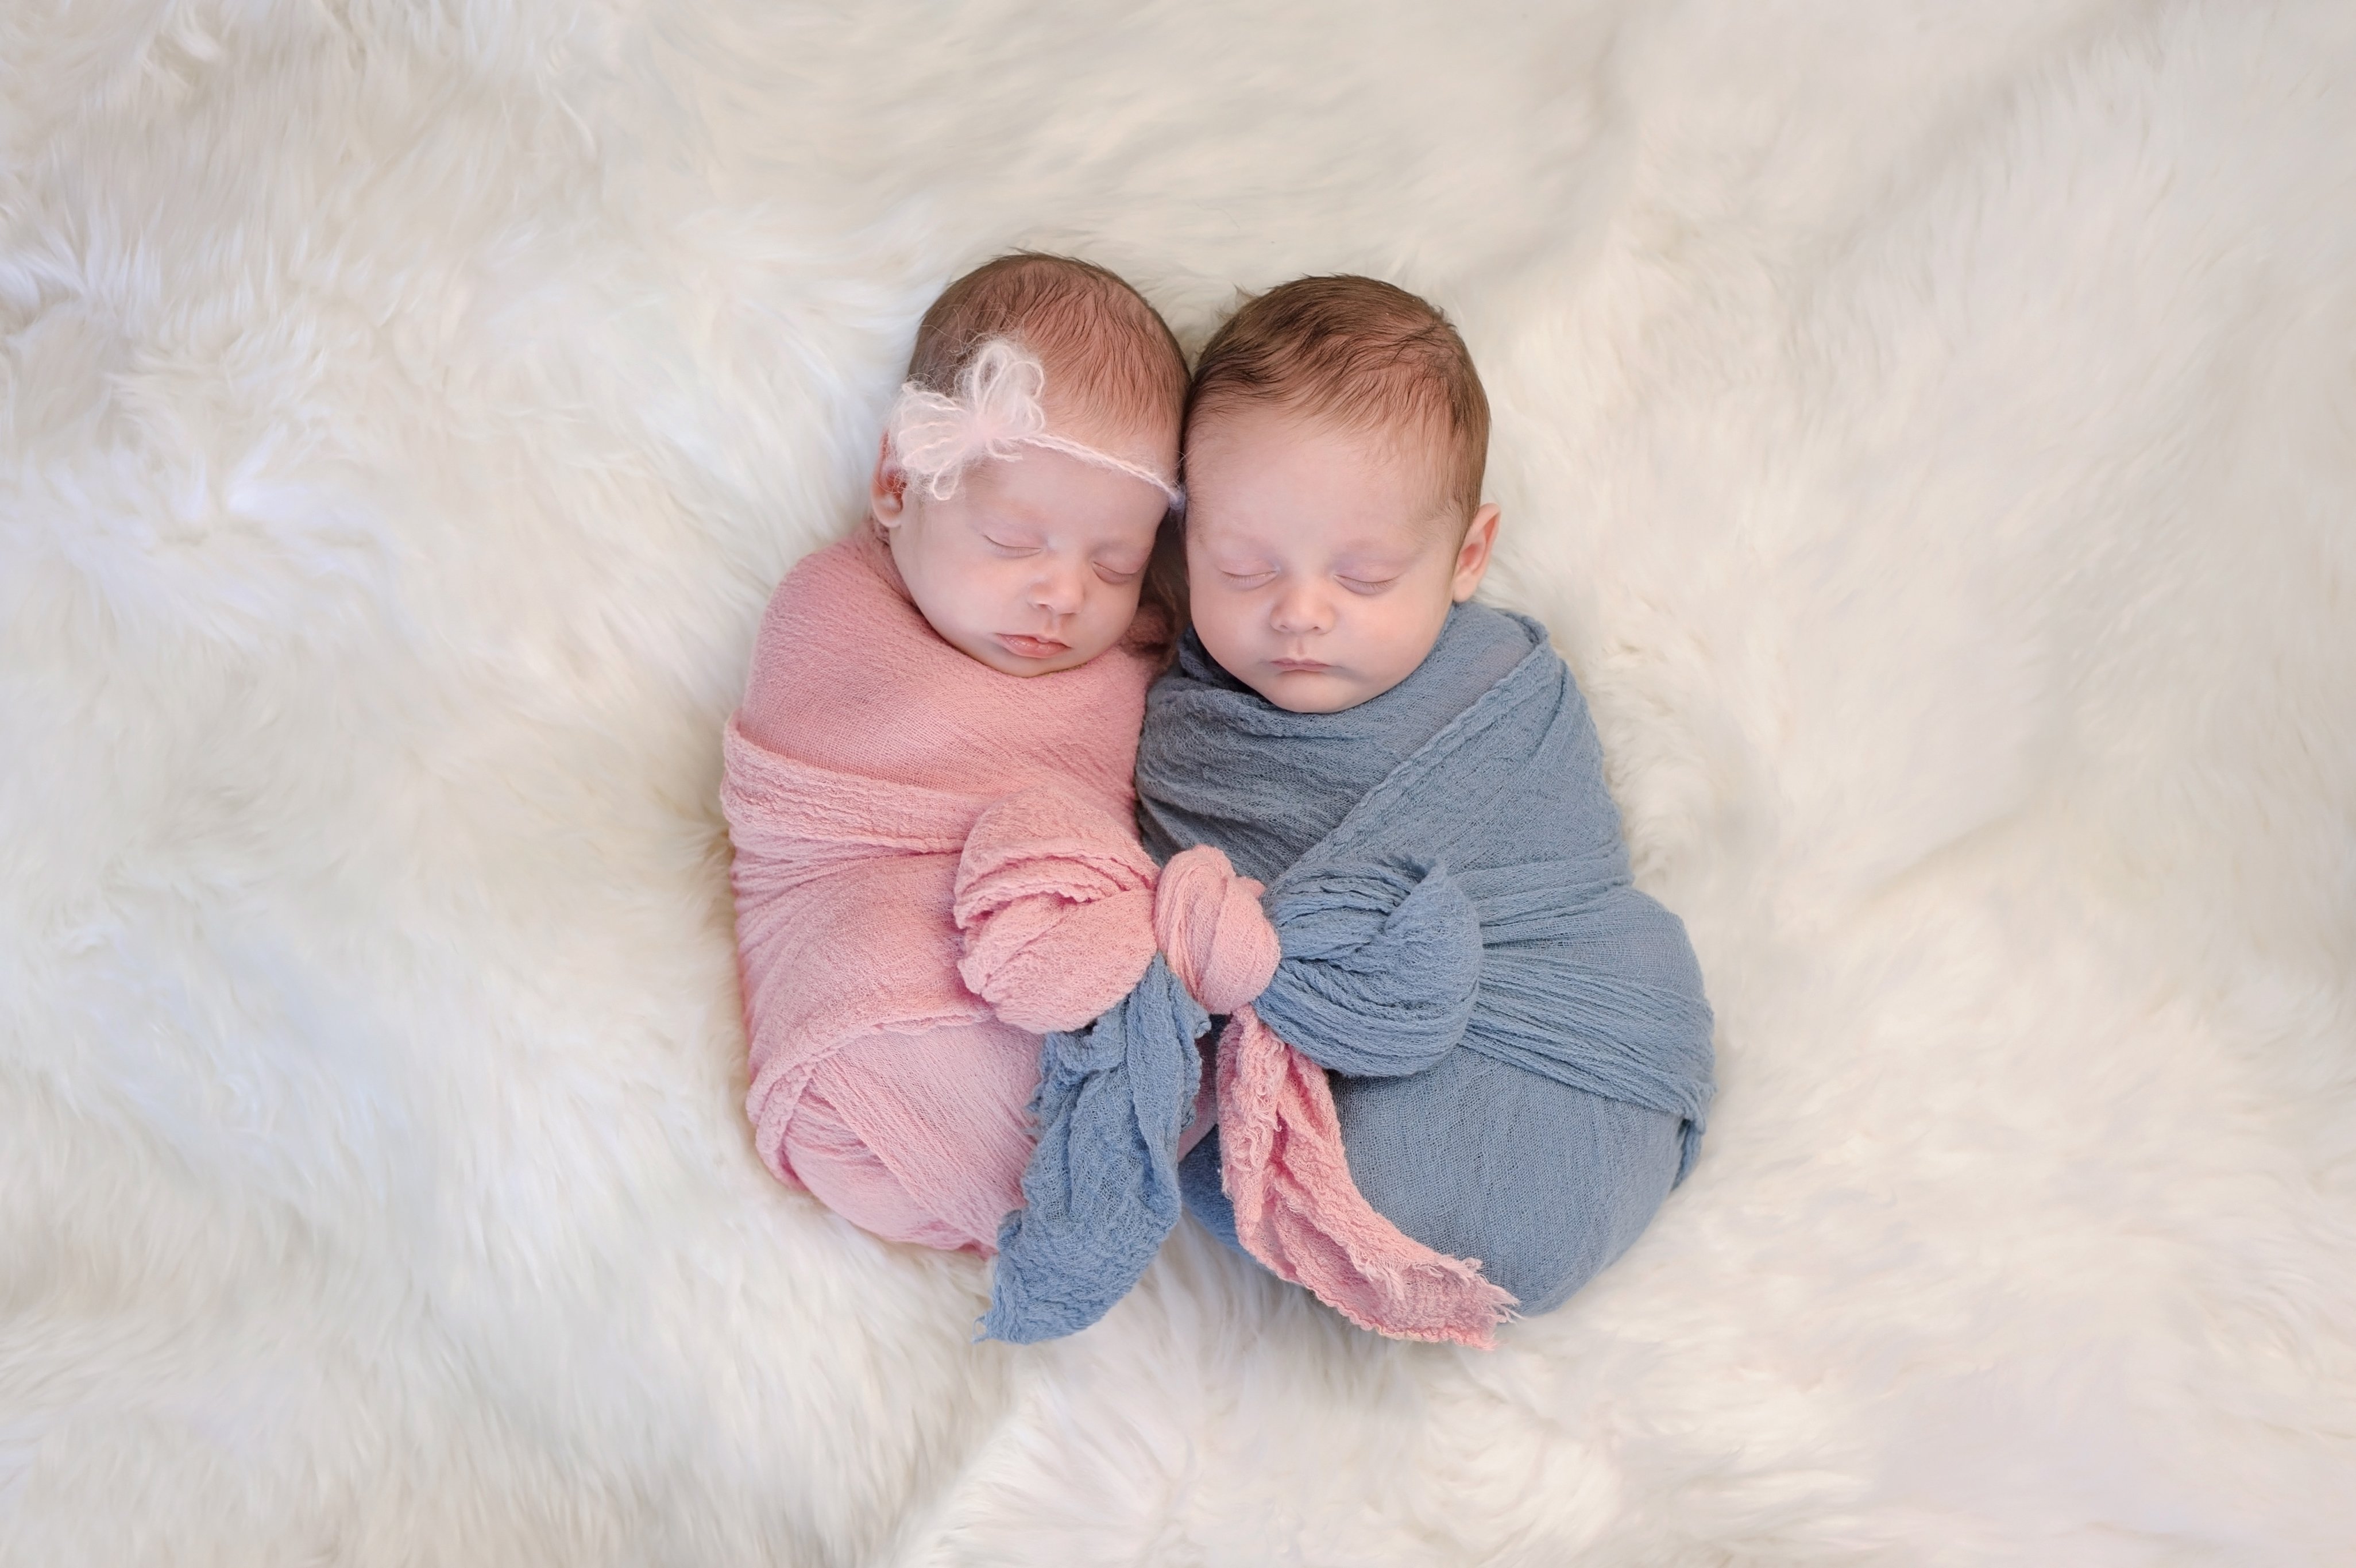 Fraternal twin babies. | Source: Shutterstock